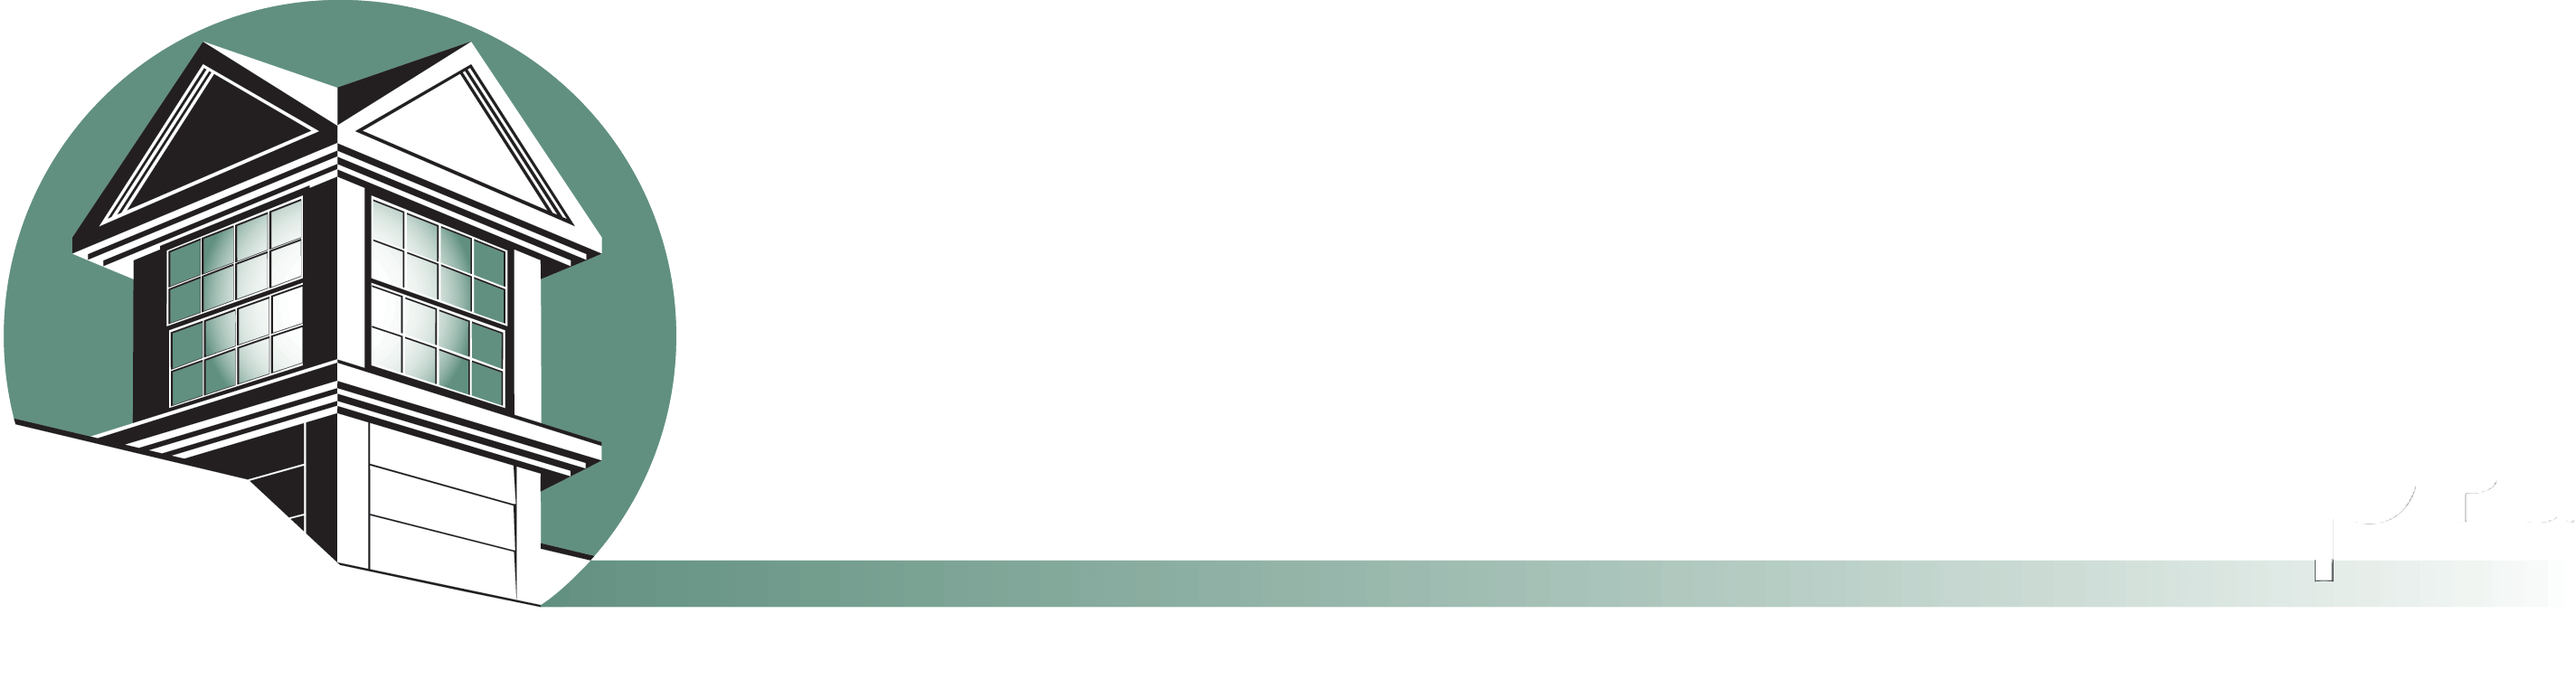 The Geller Dental Group p.c. White Text Logo